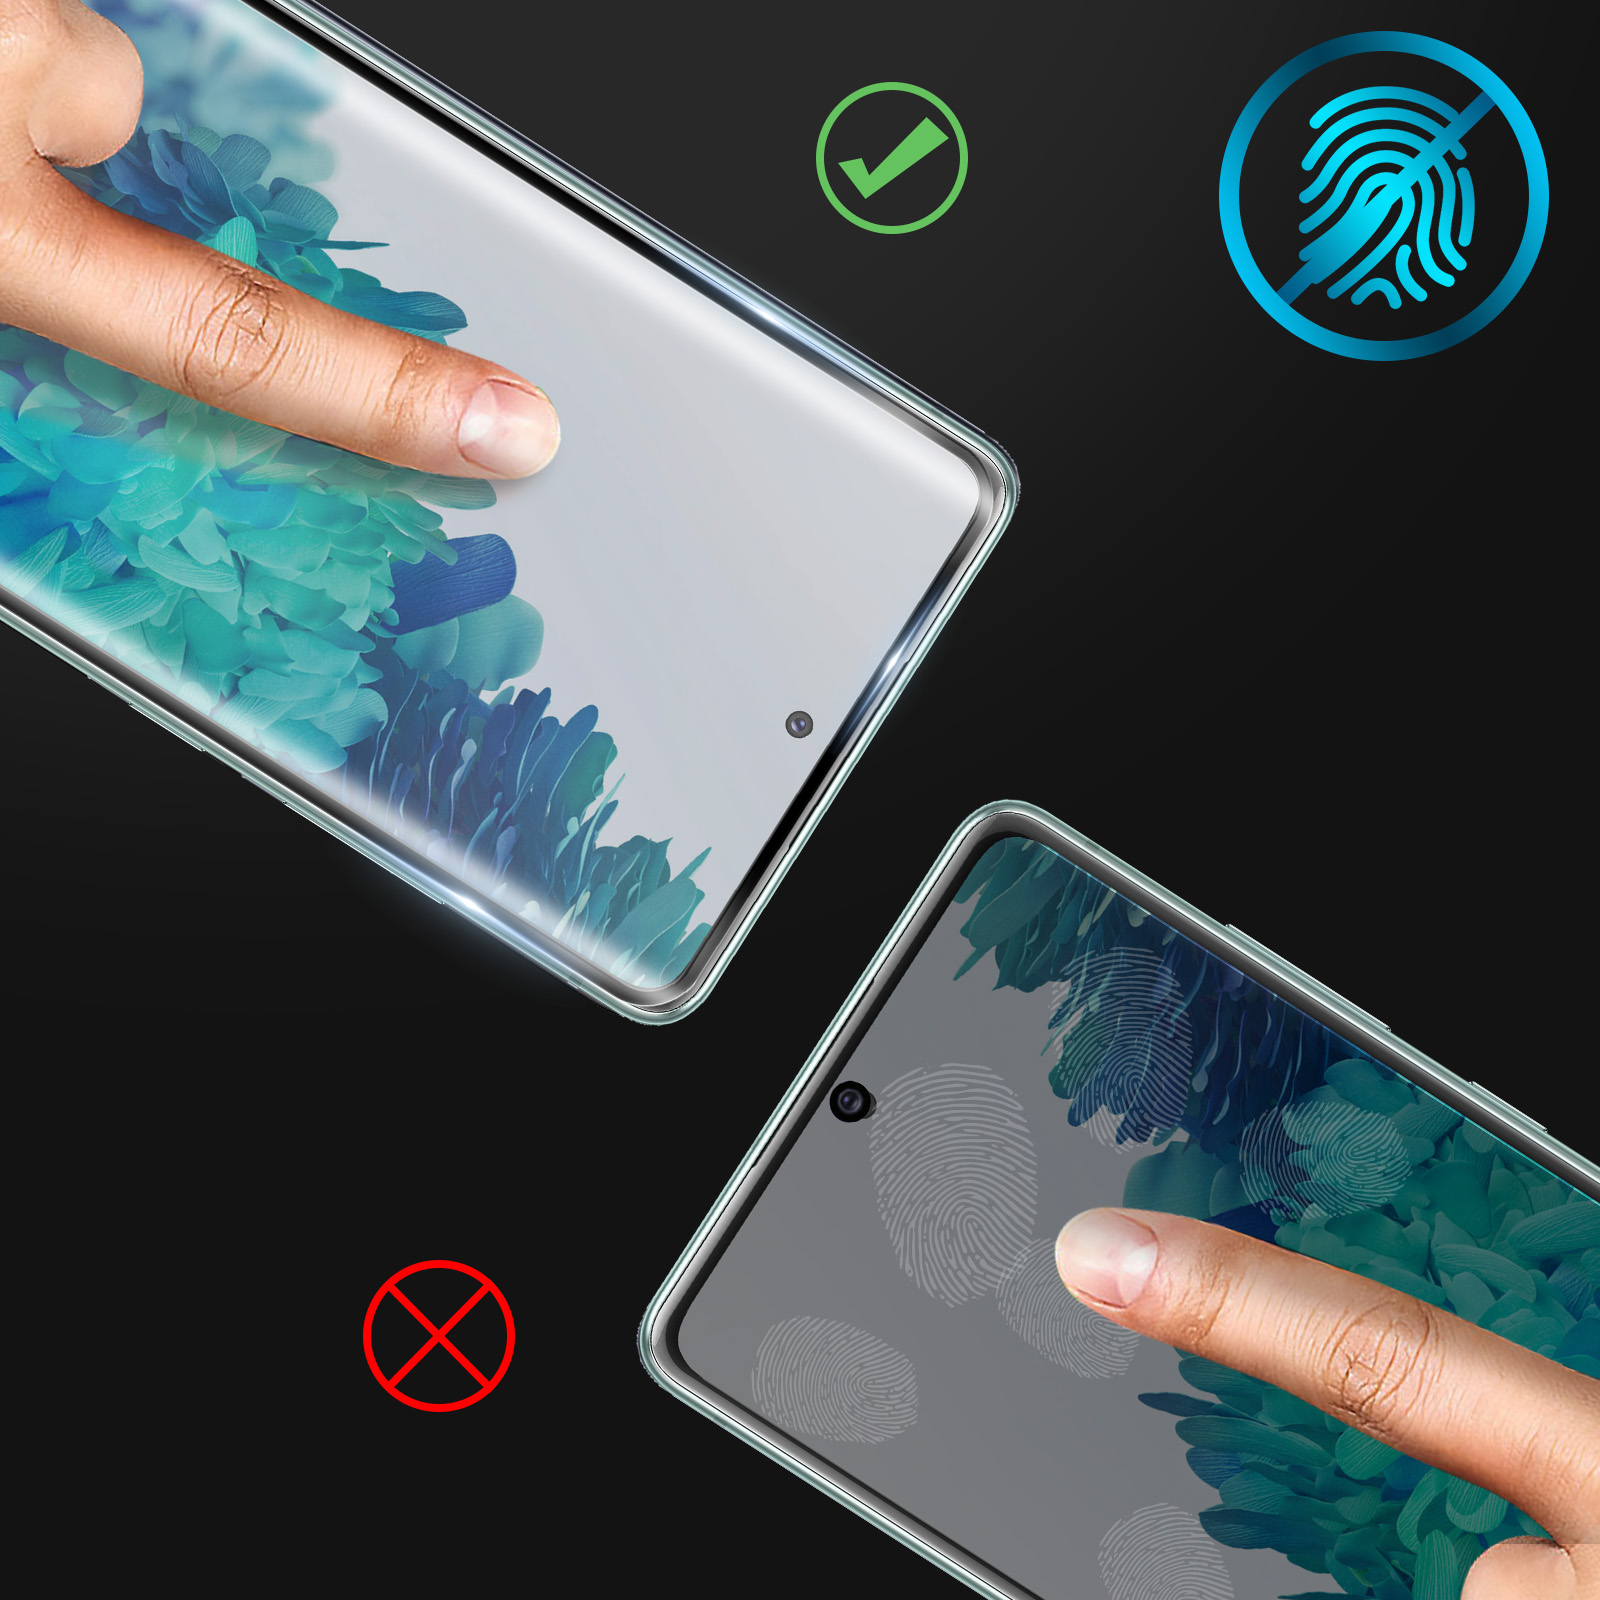 Vitre de protection en verre trempé Samsung Galaxy S20 FE - TM Concept